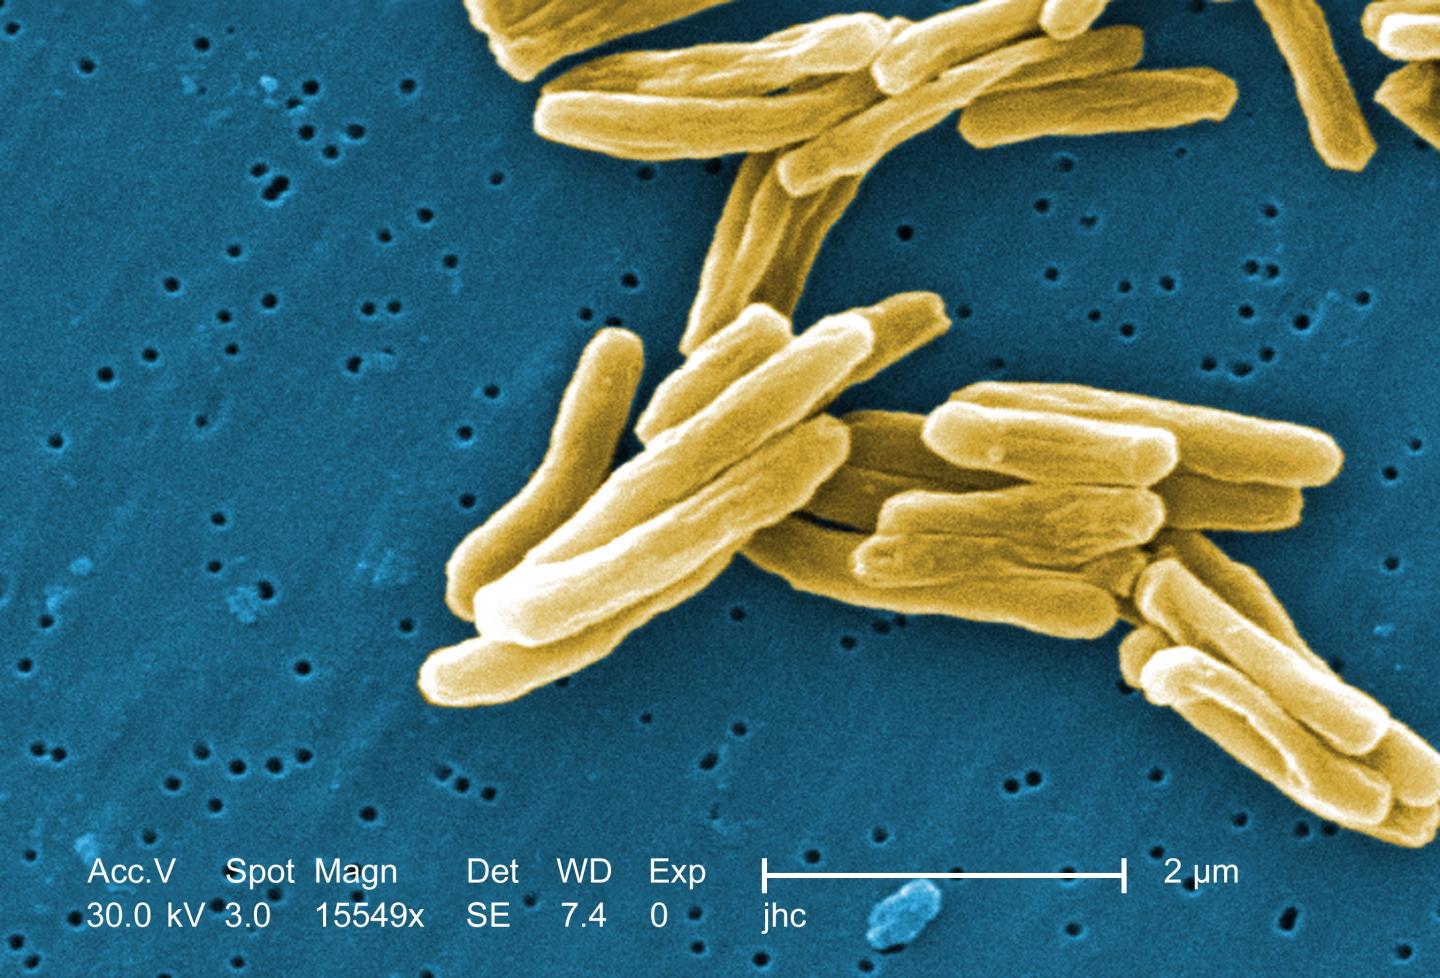 TB-Causing Bacteria